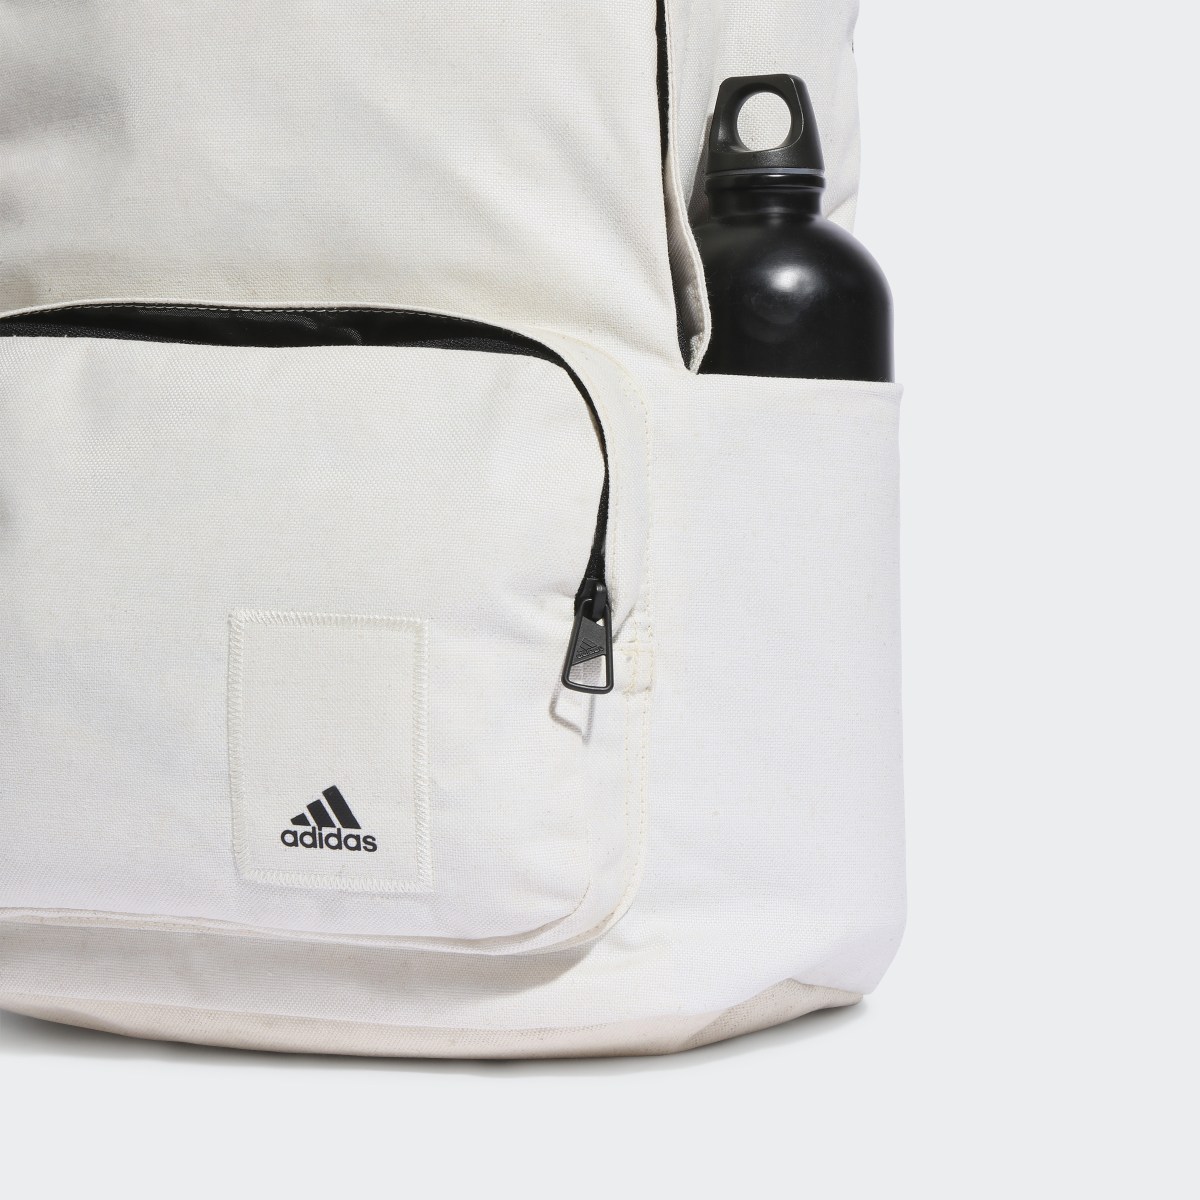 Adidas Classic Foundation Lounge Attitude Backpack 2. 7